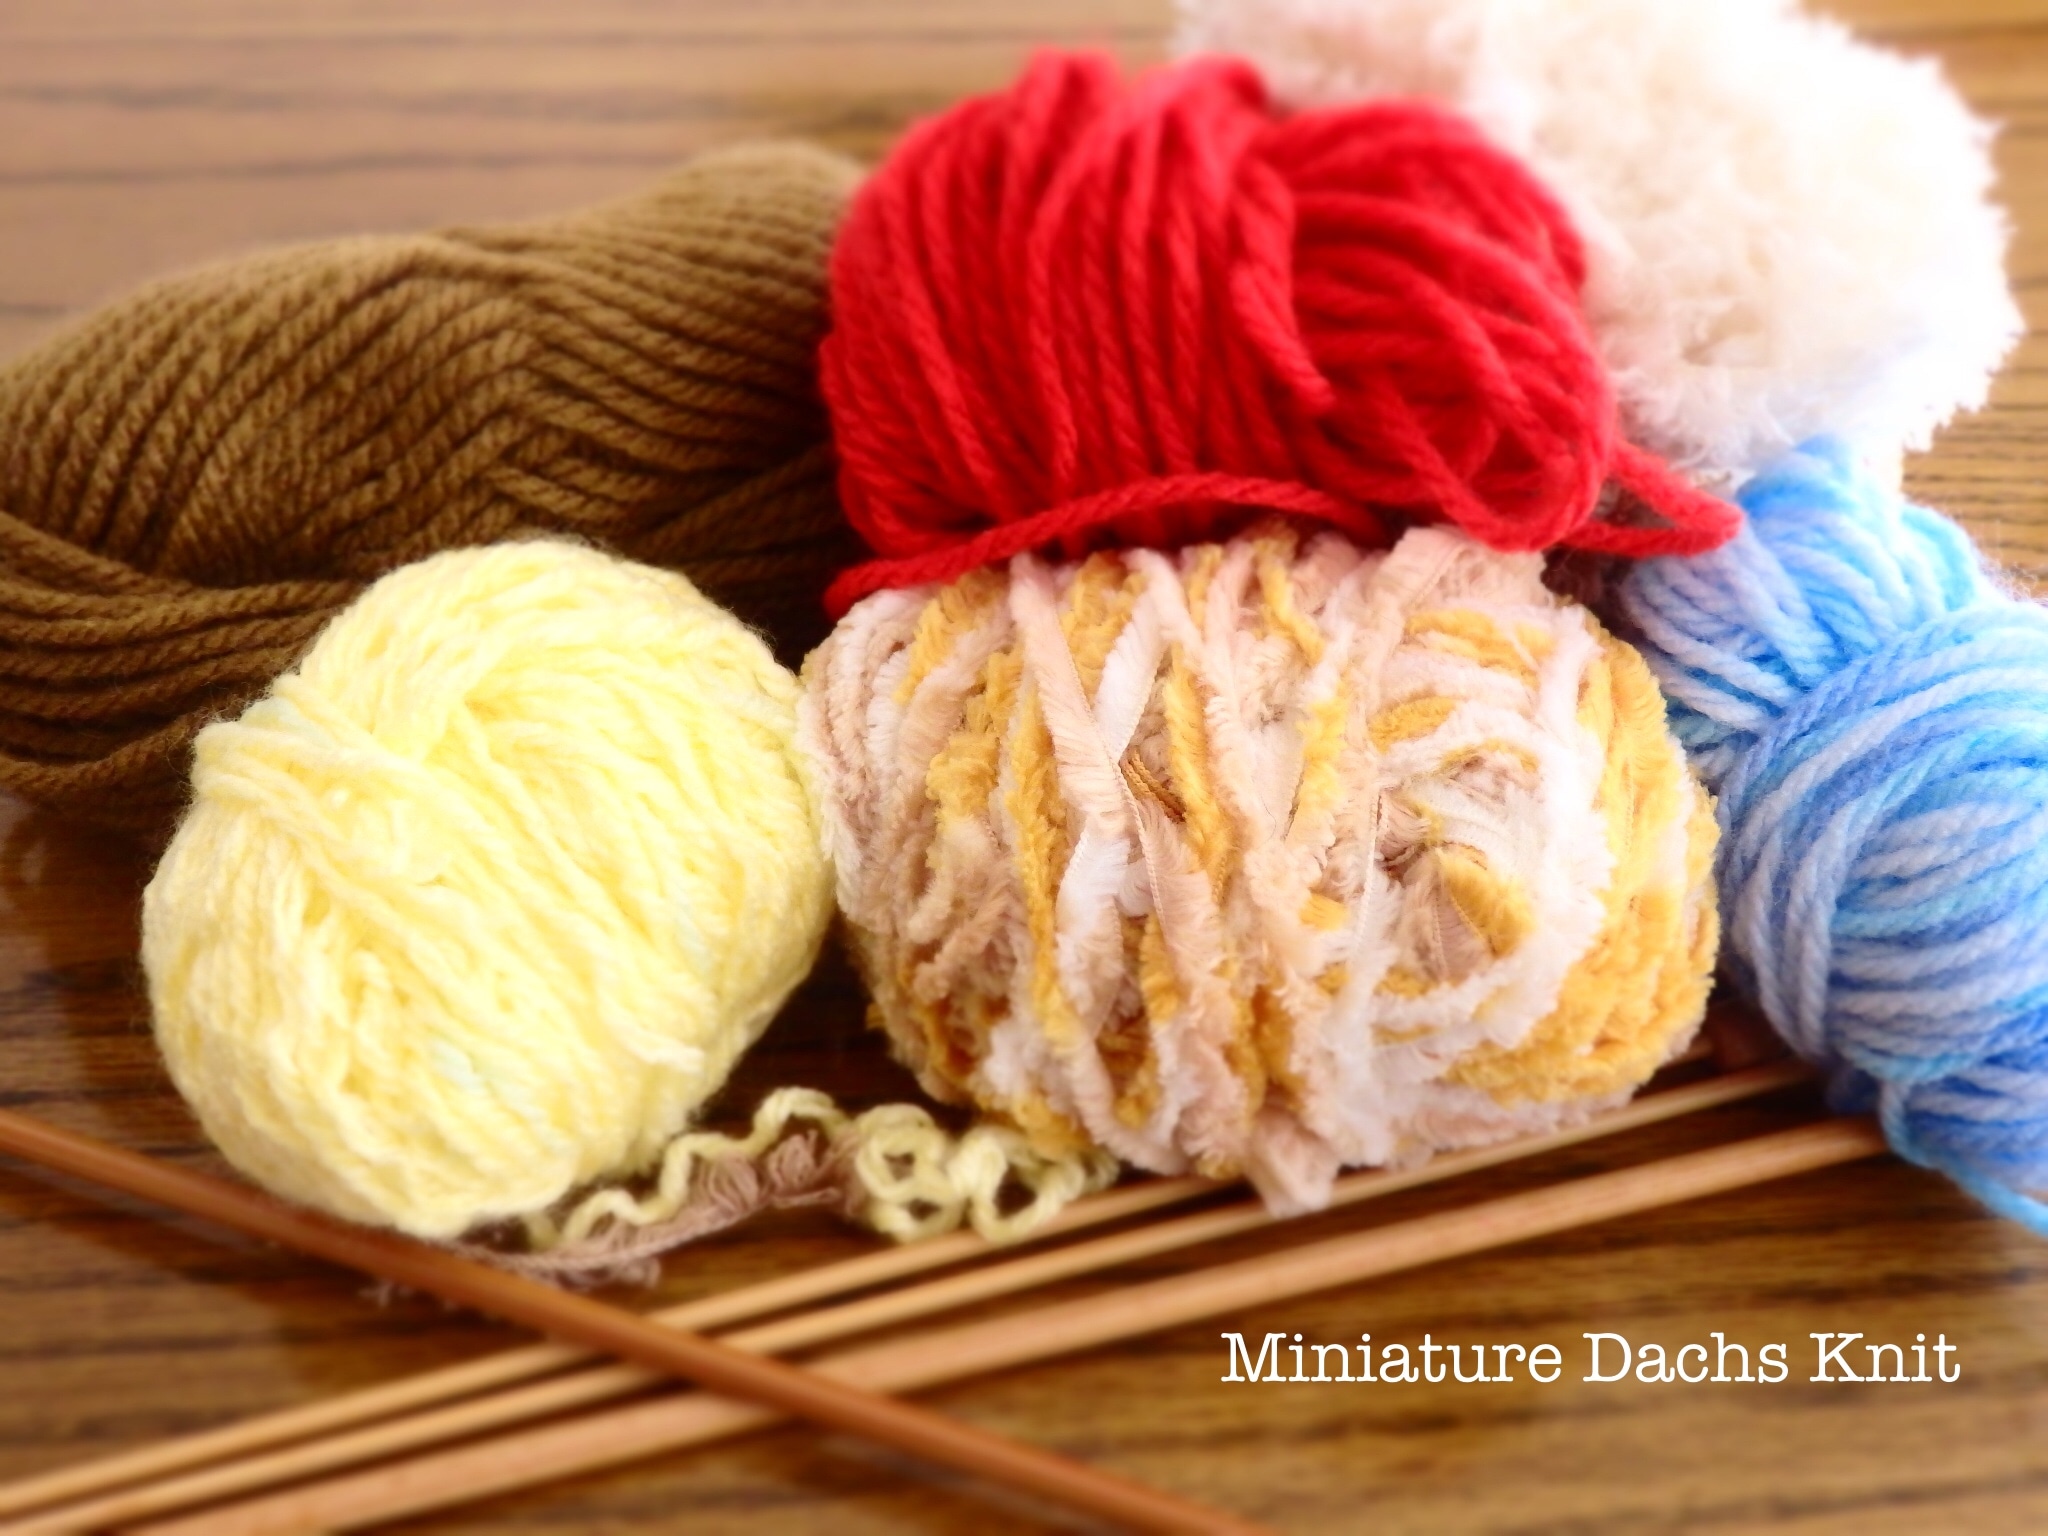 Miniature Dachs Knit